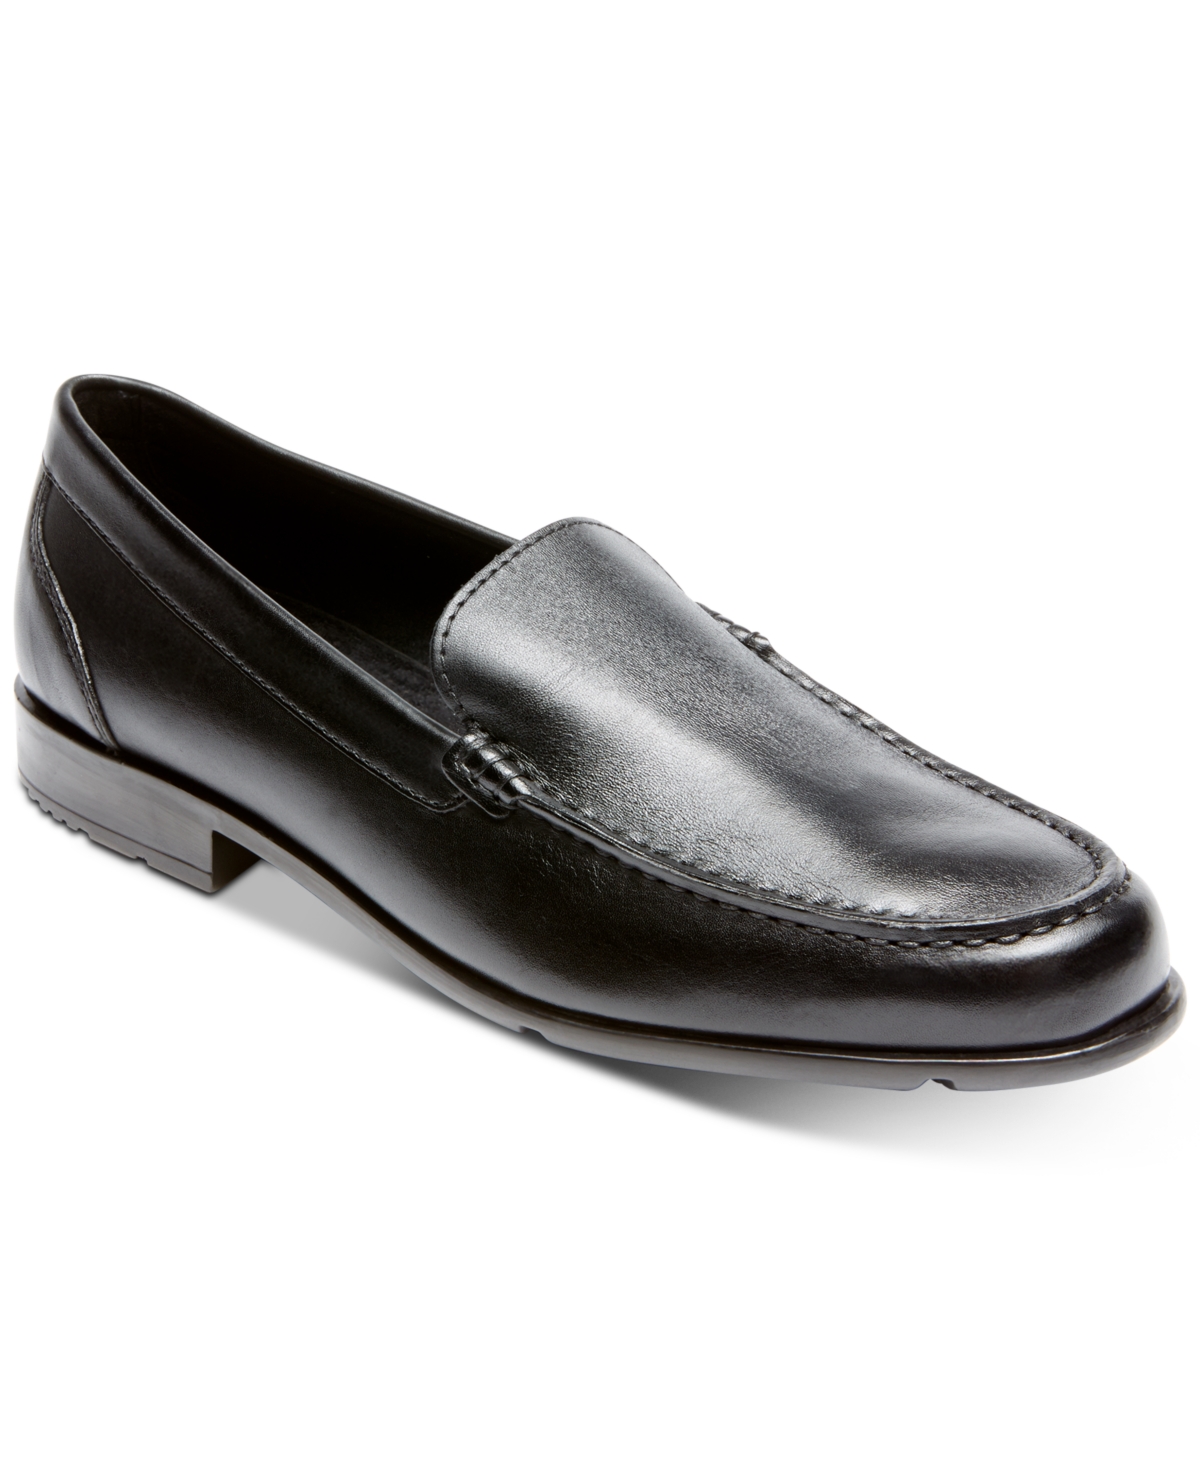 Men's Classic Venetian Loafer Shoes - Black II